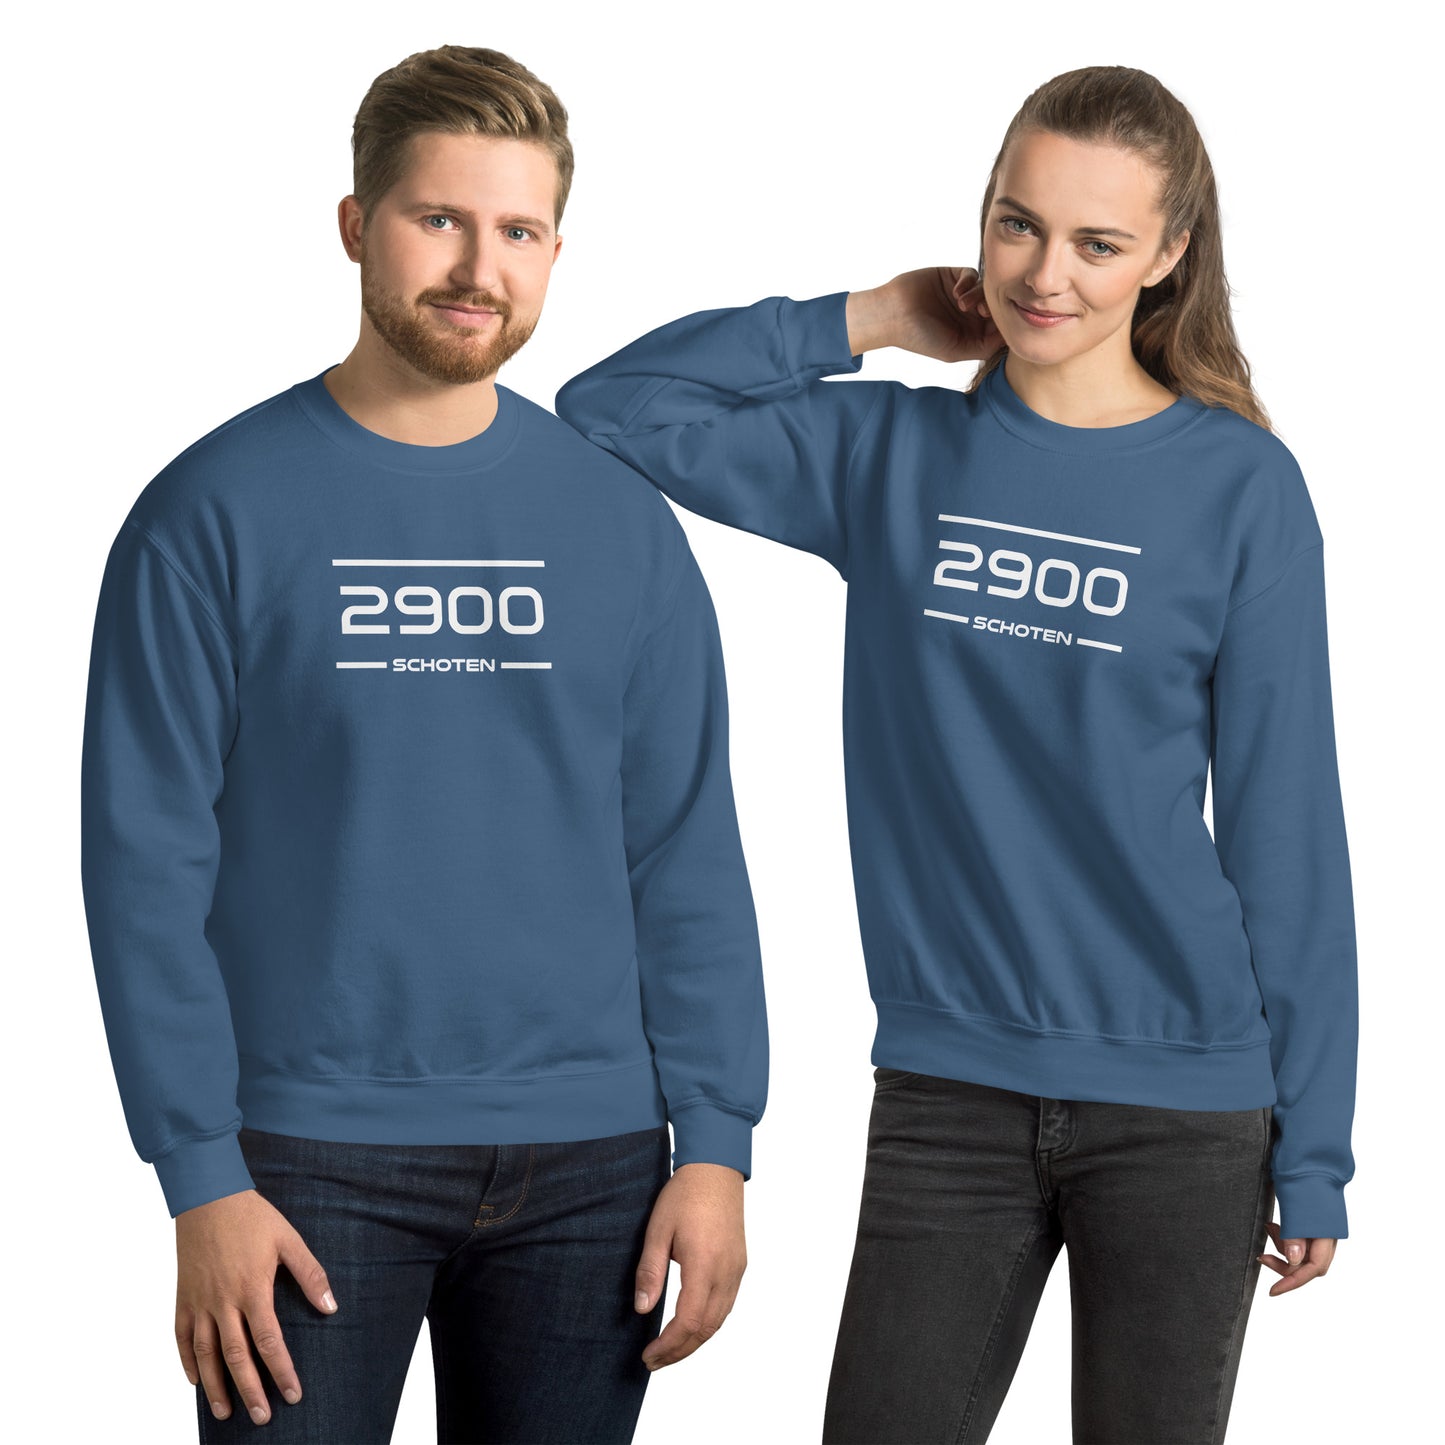 Sweater - 2900 - Schoten (M/V)